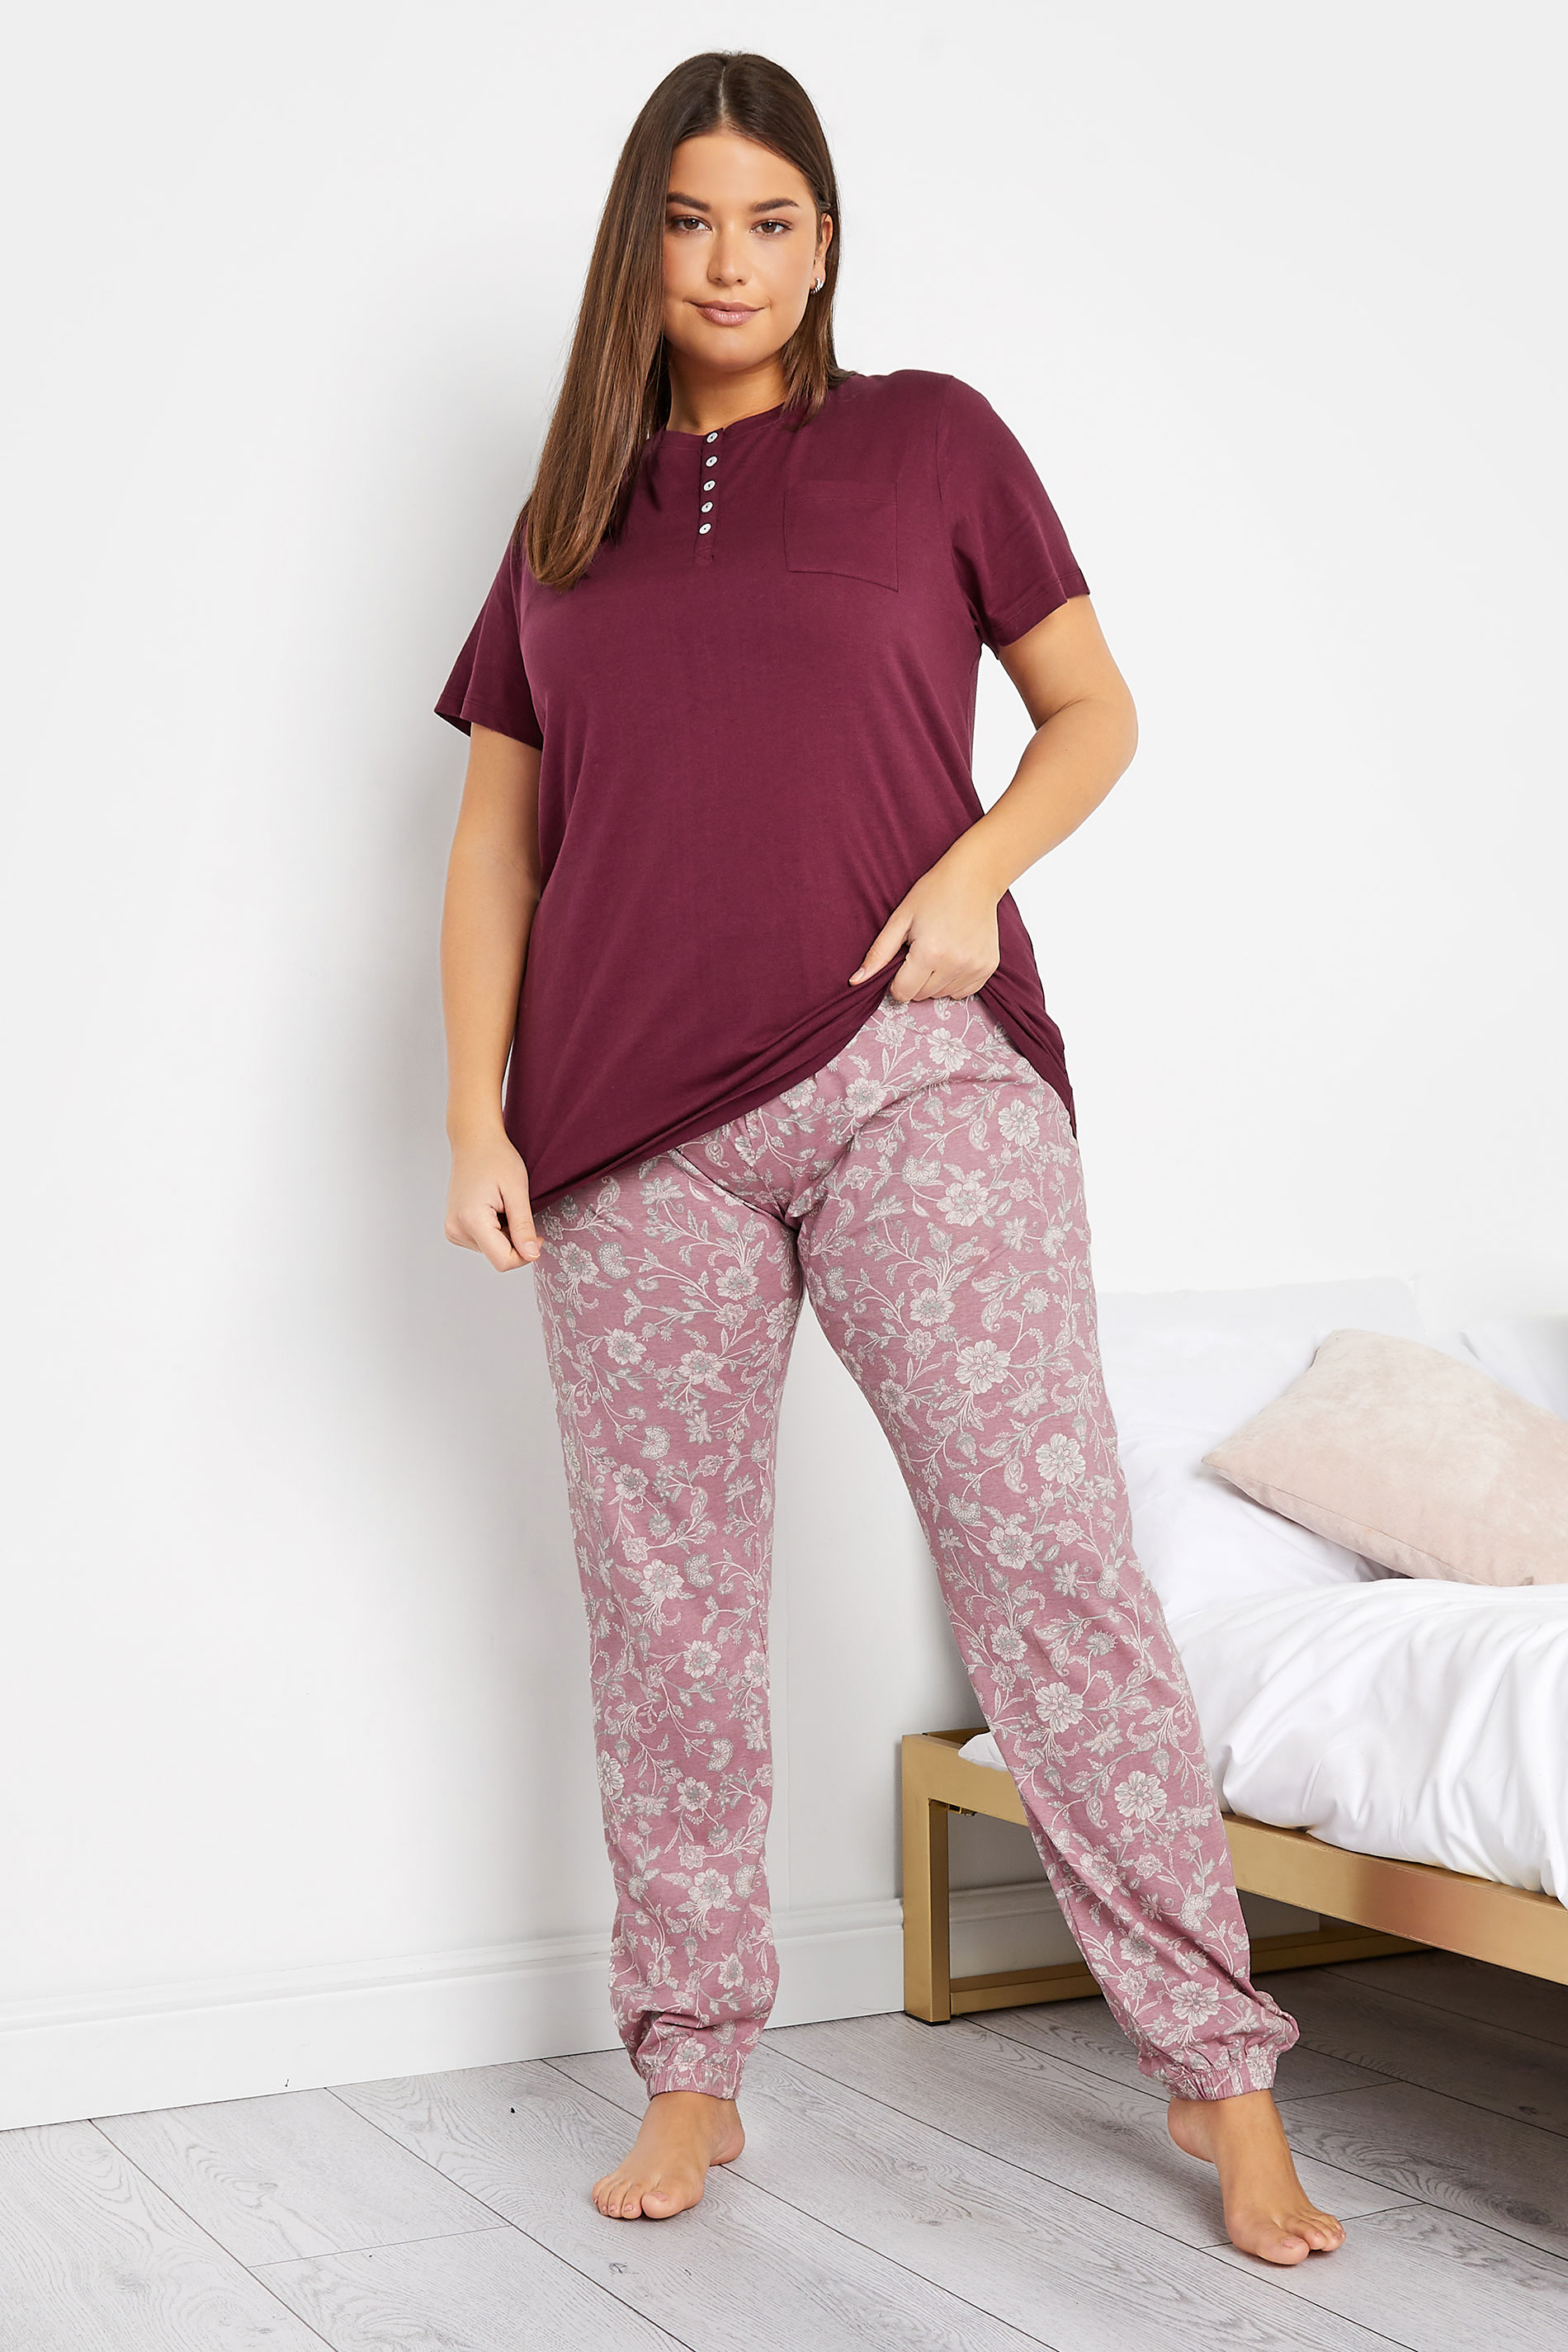 LTS Tall Burgundy Red Placket Pyjama Top | Long Tall Sally 2